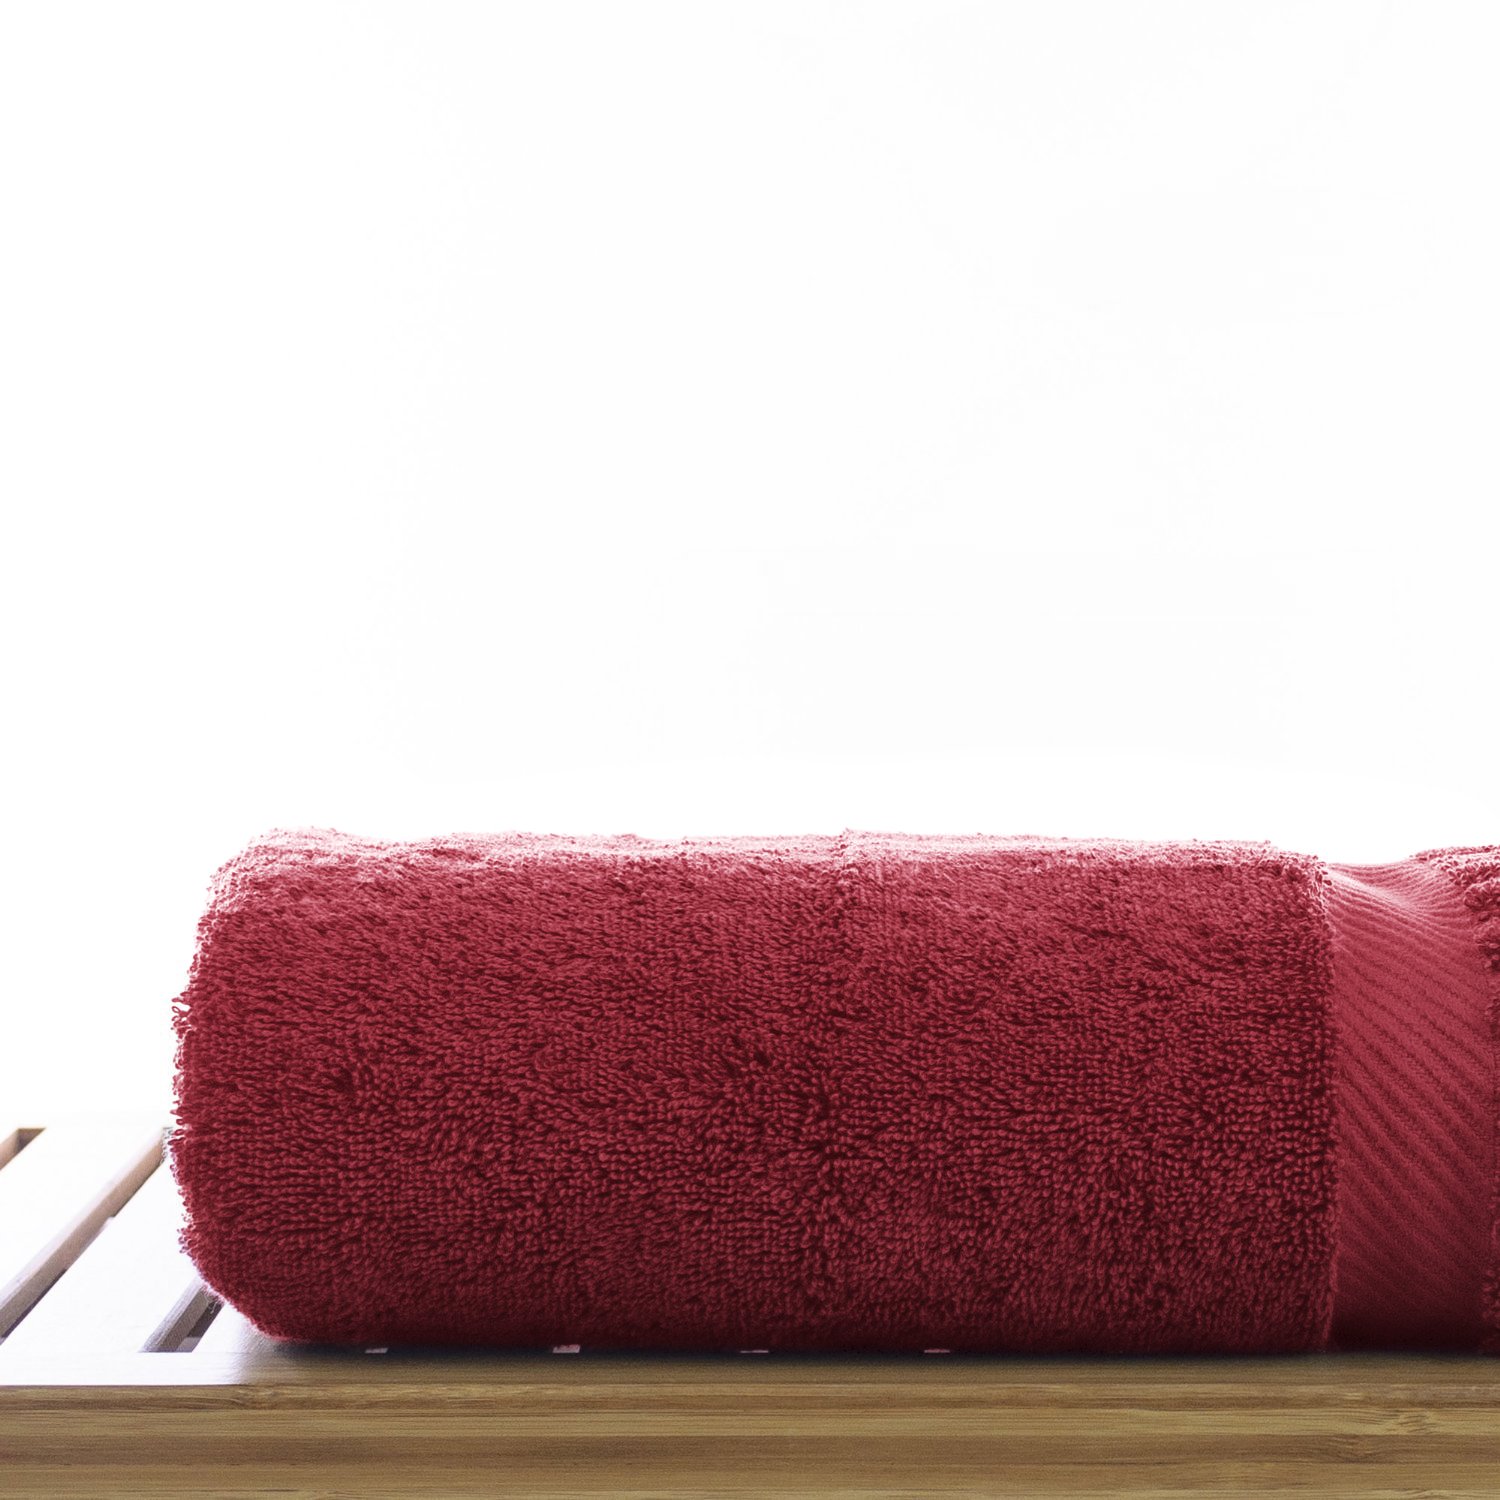 30" x 58" - 18 lbs/doz - %100 Turkish Cotton Cranberry Bath Towel - Piano Border-Robemart.com